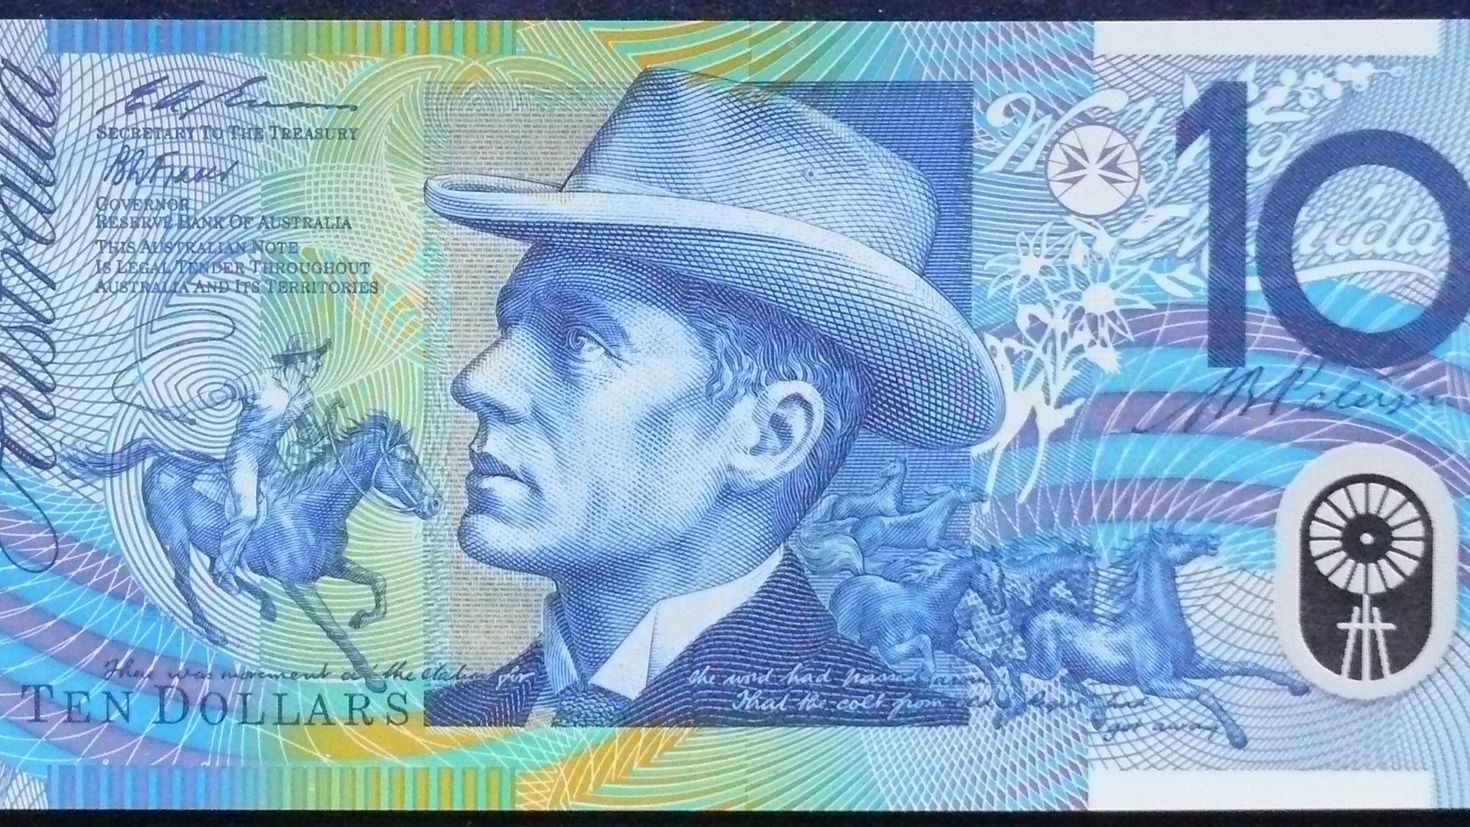 T me banknotes. Банкнота Австралия 10 долларов. Купюра Австралии 10. 10 Австралийских долларов. Австралийский доллар купюры.